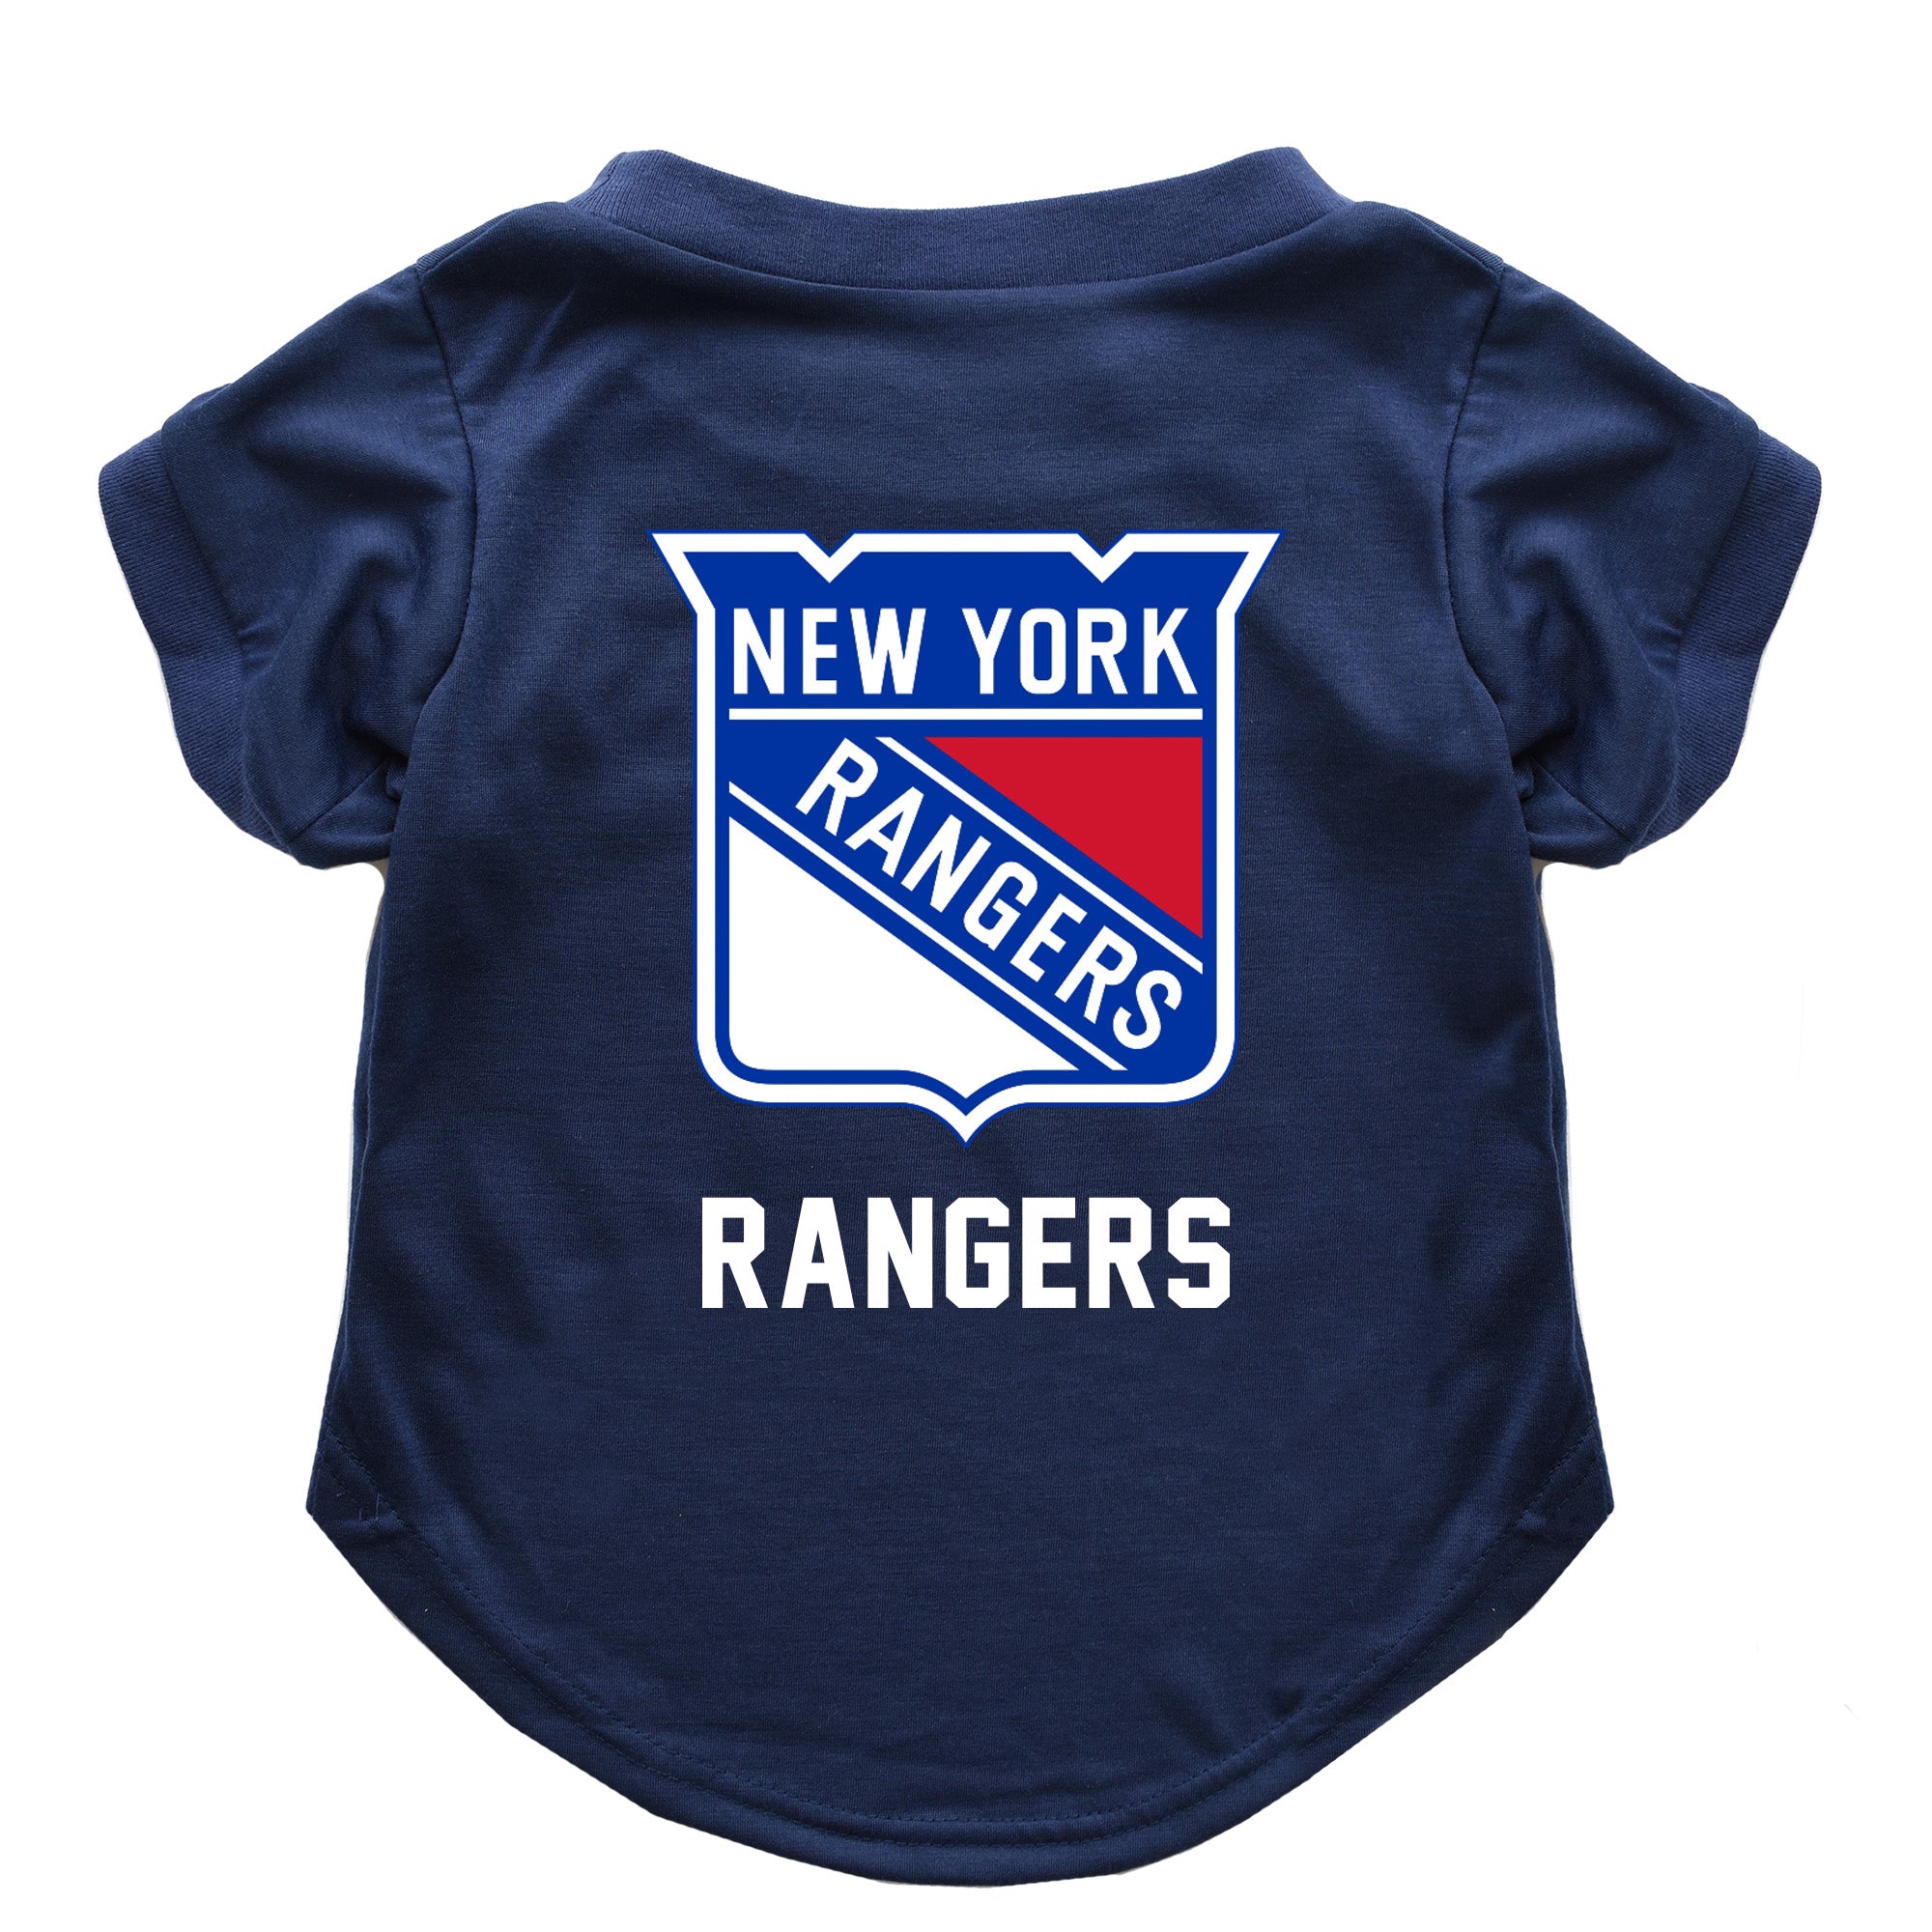 New York Rangers Kids Apparel, Rangers Youth Jerseys, Kids Shirts